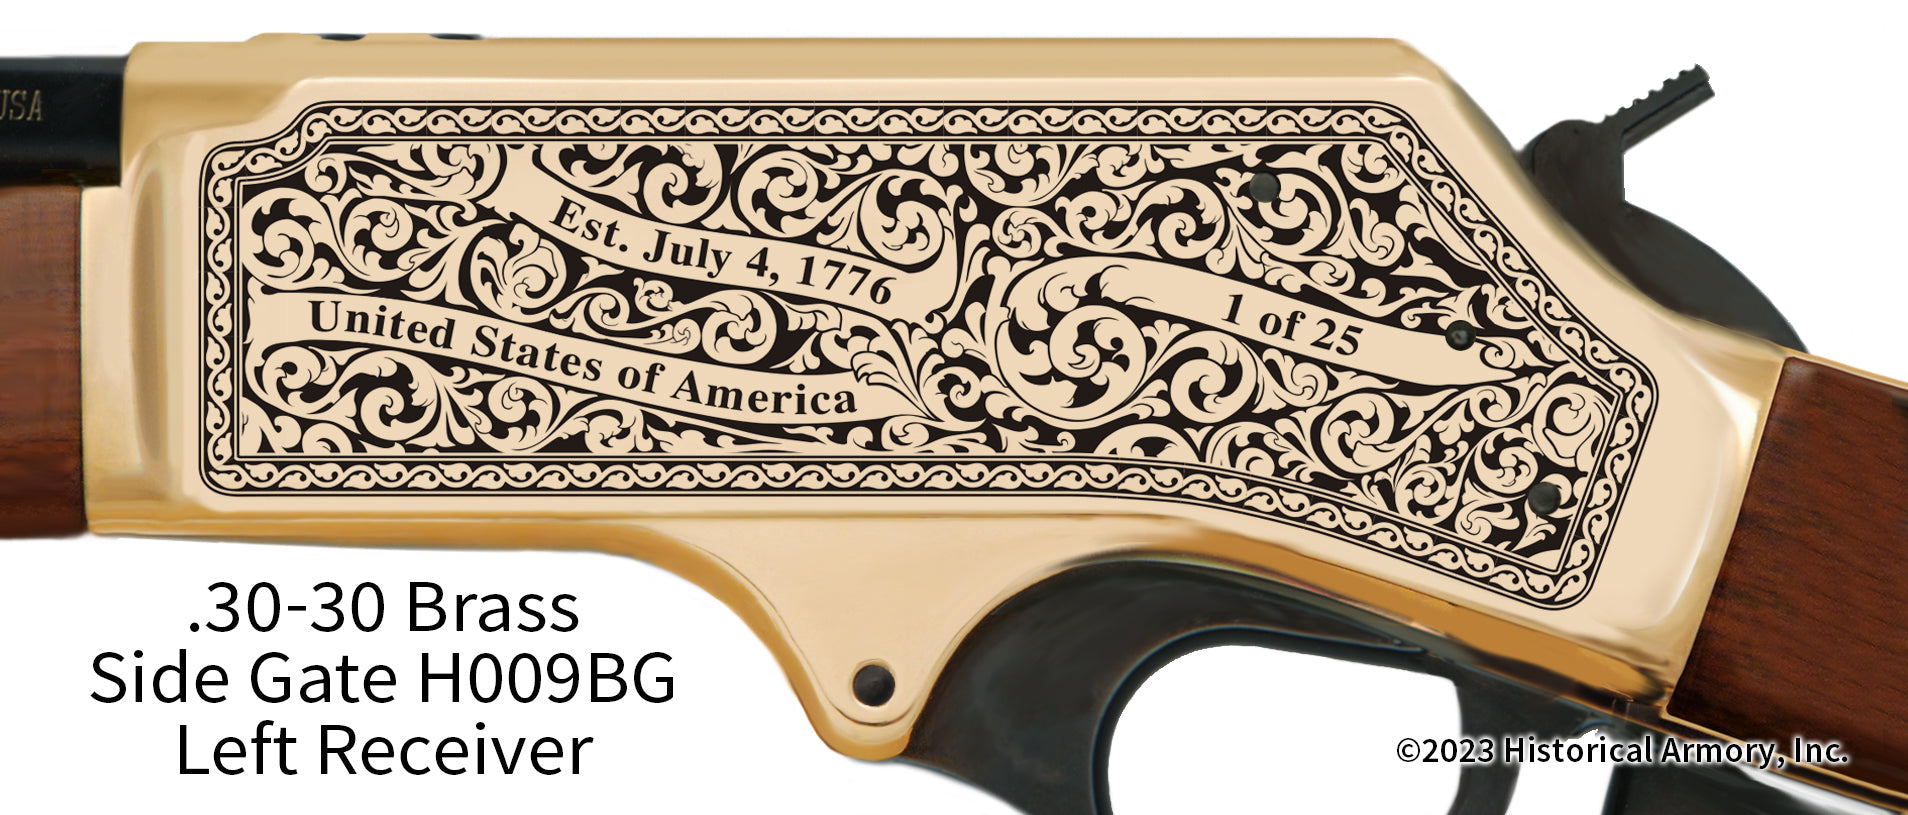 Avery County North Carolina Engraved Henry .30-30 Brass Side Gate Rifle